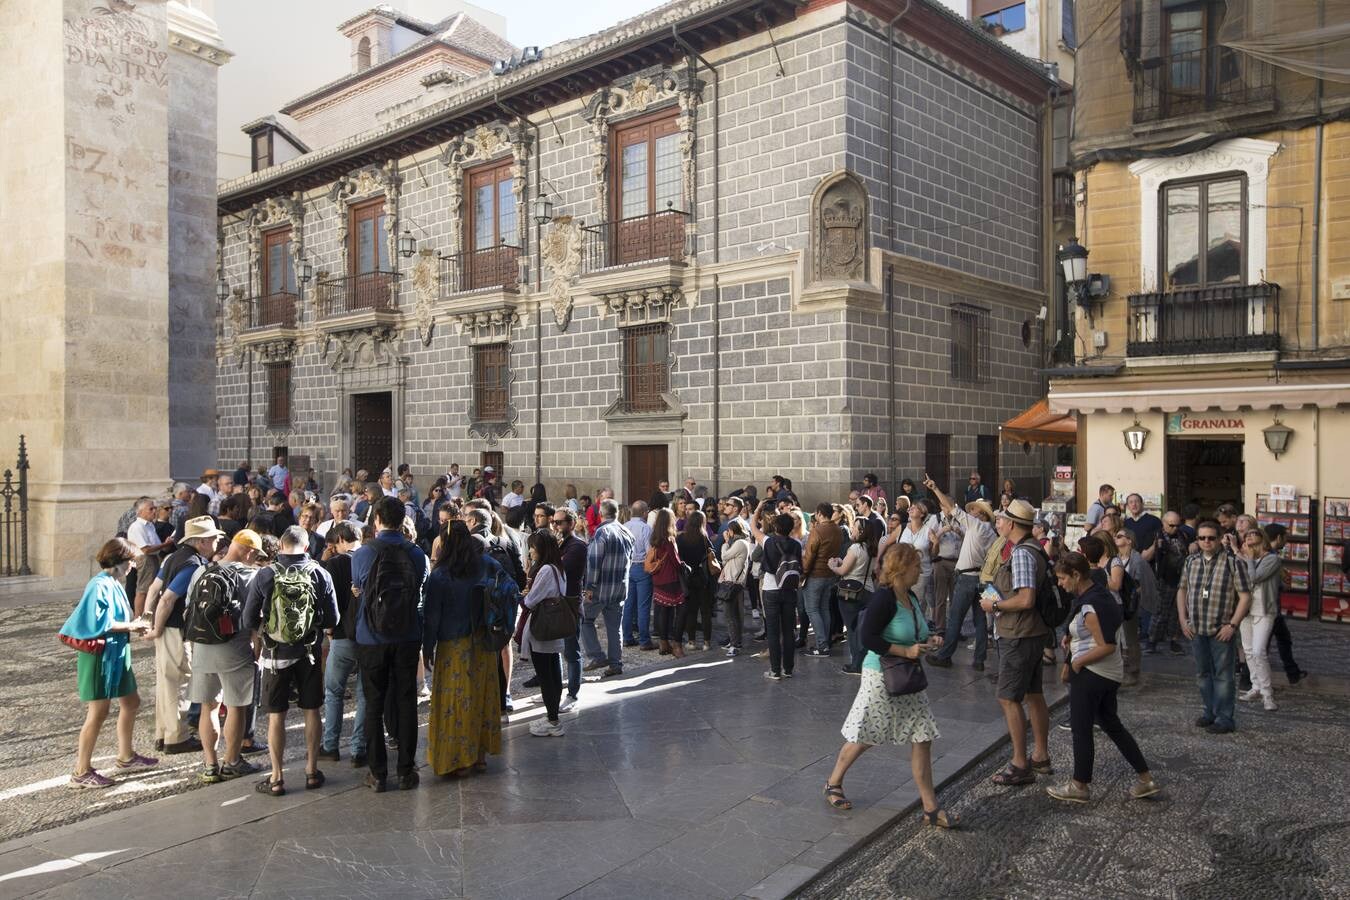 Mlles de visitantes llenan las calles de Granada